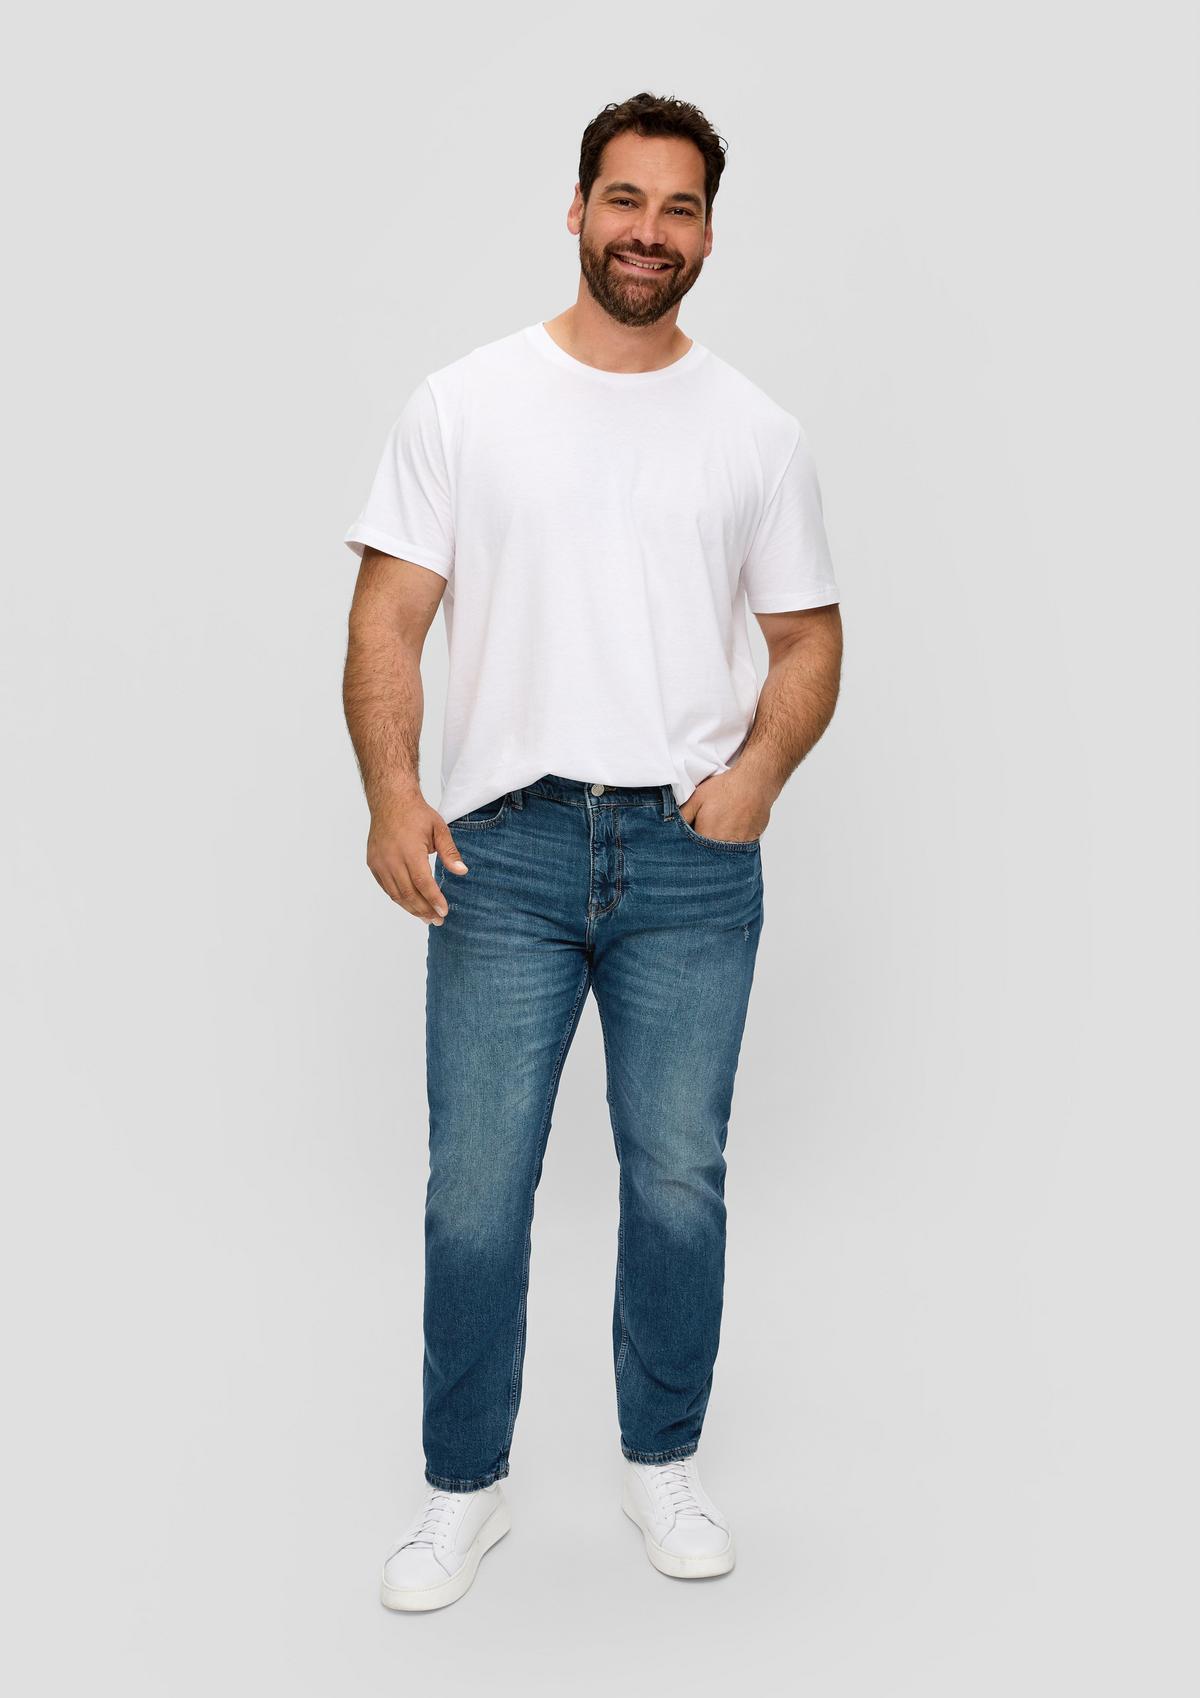 Jeans hlače Casby/kroj High Rise/ravne hlačnice